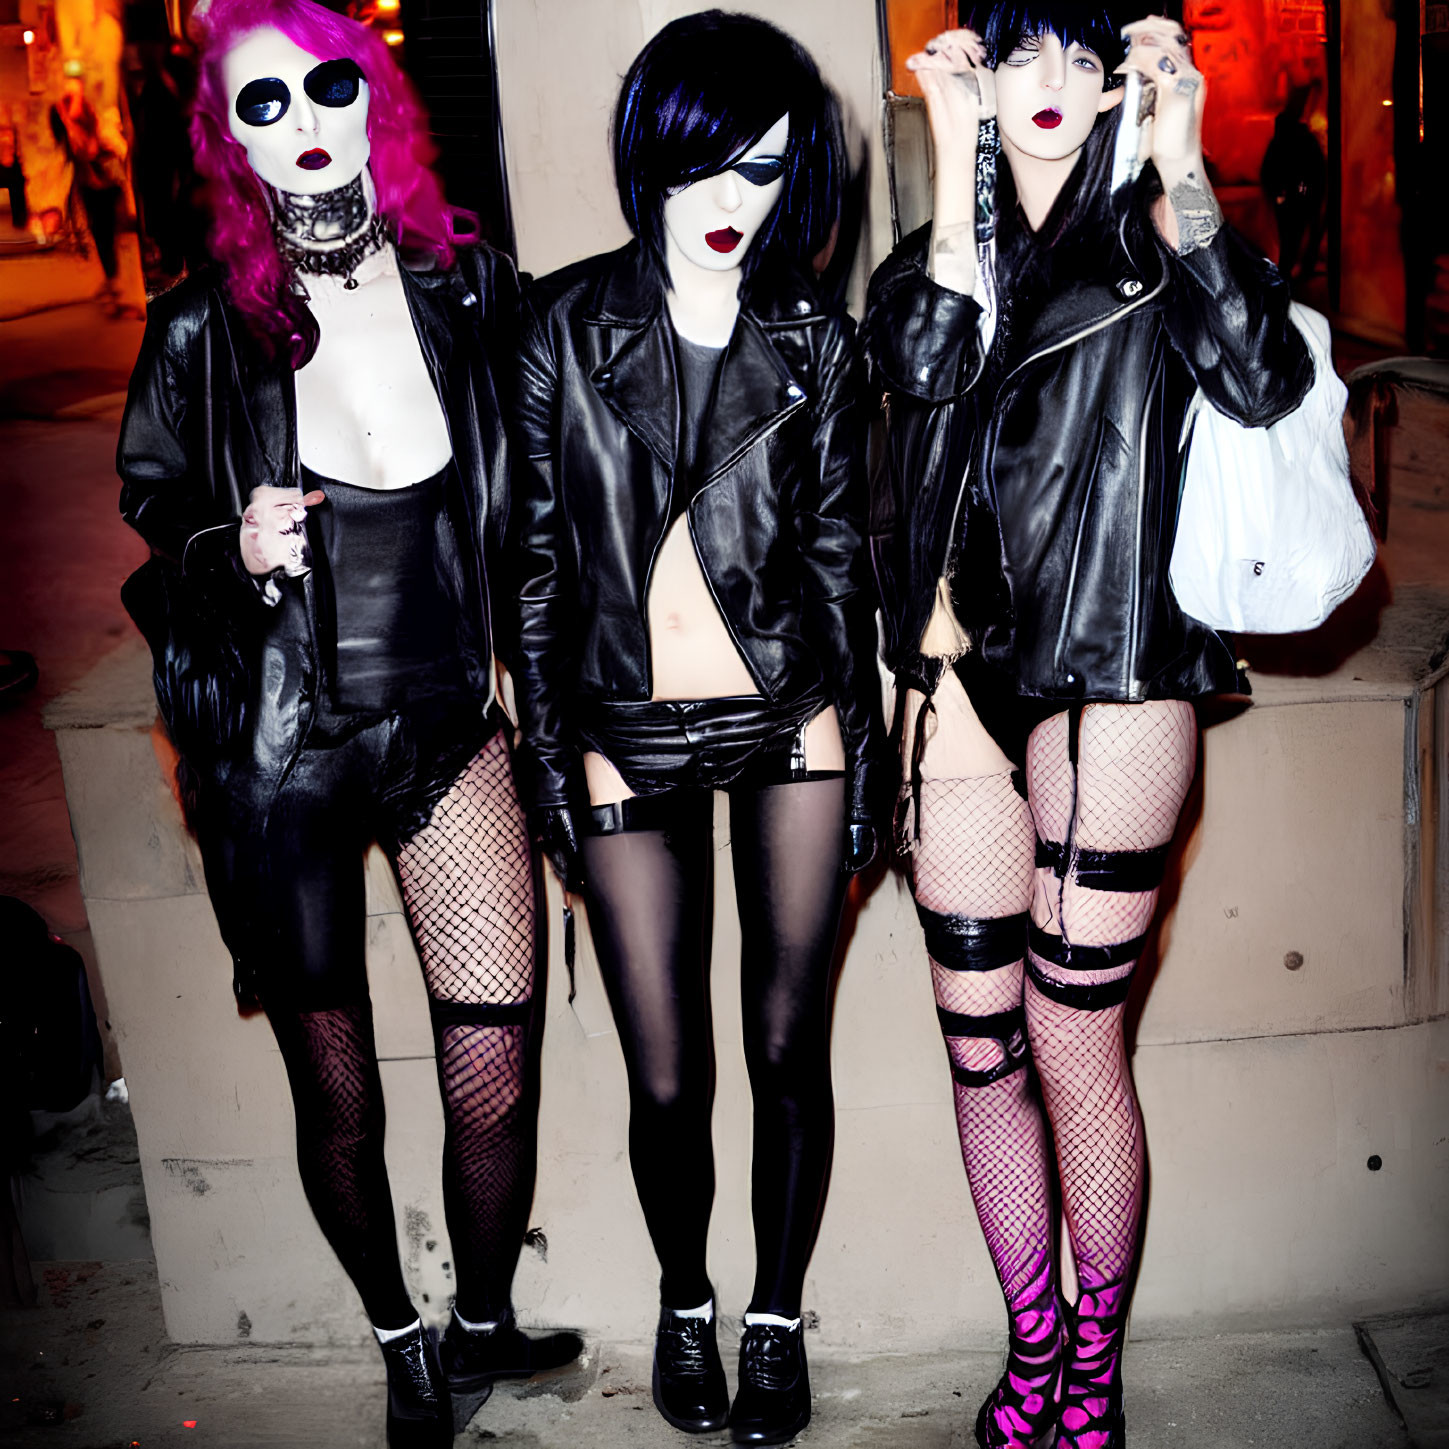 Three people in punk-inspired attire on city street at night